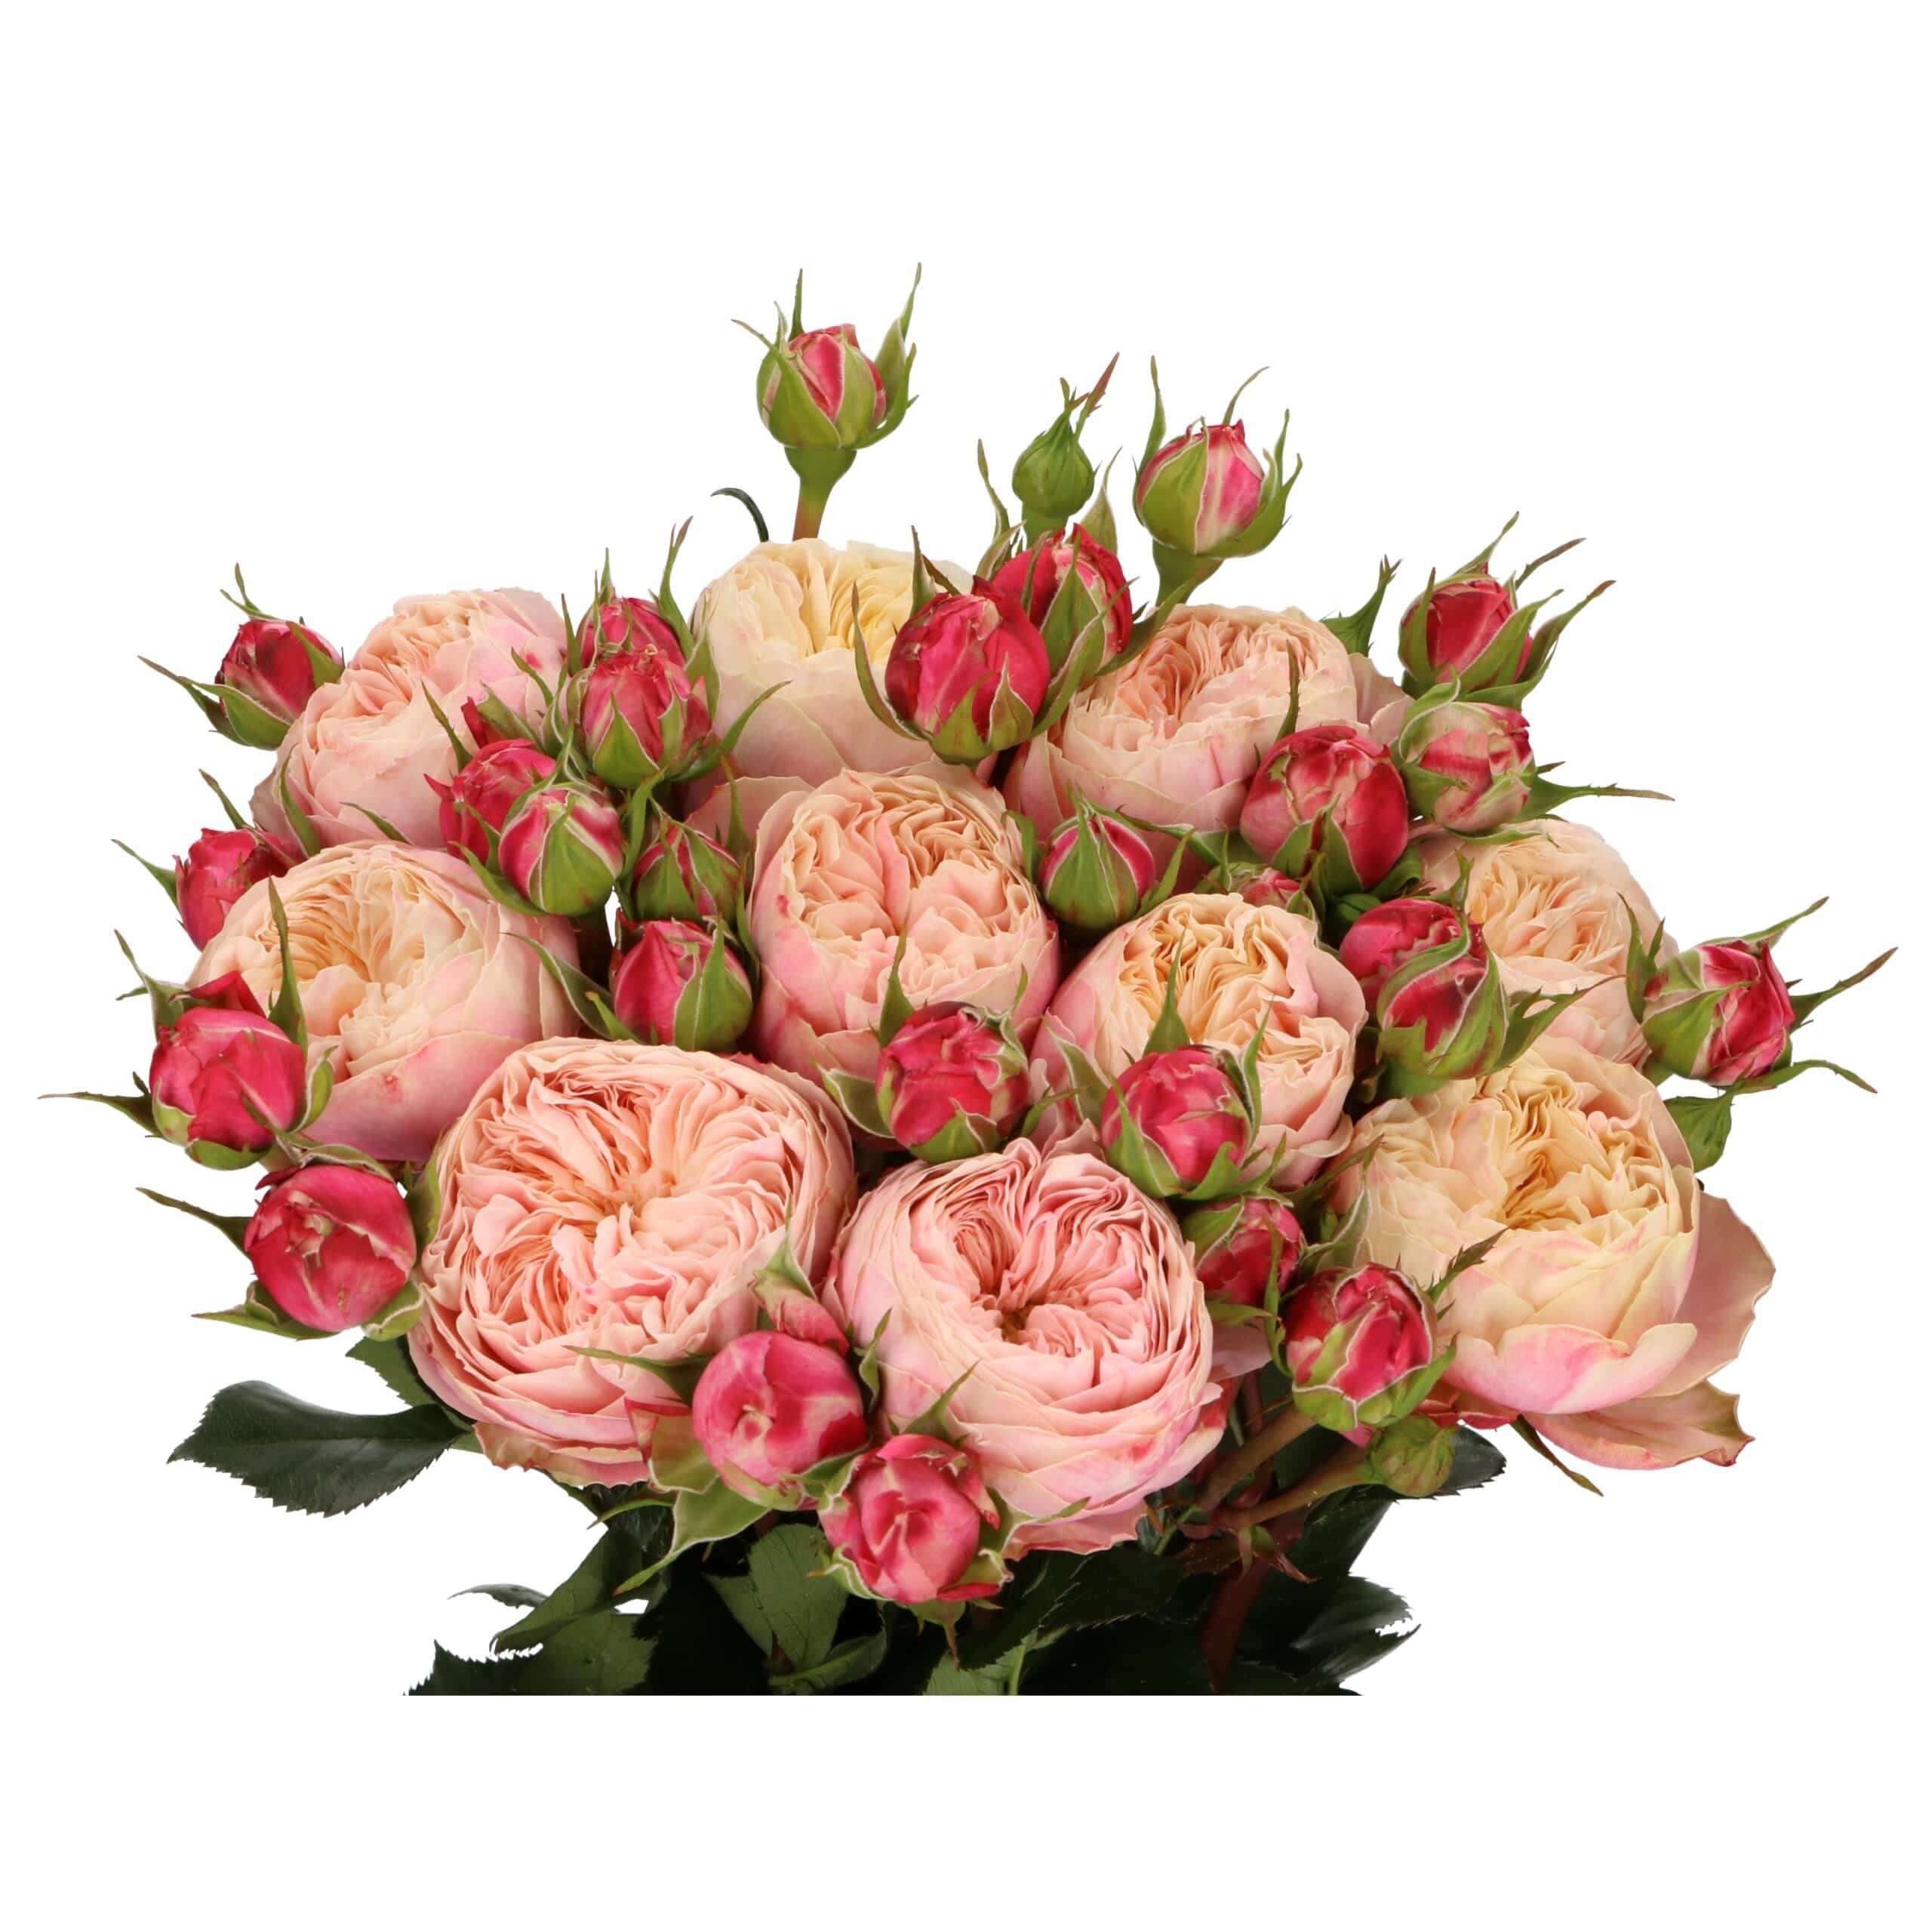 Victorian Classic - VIP roses